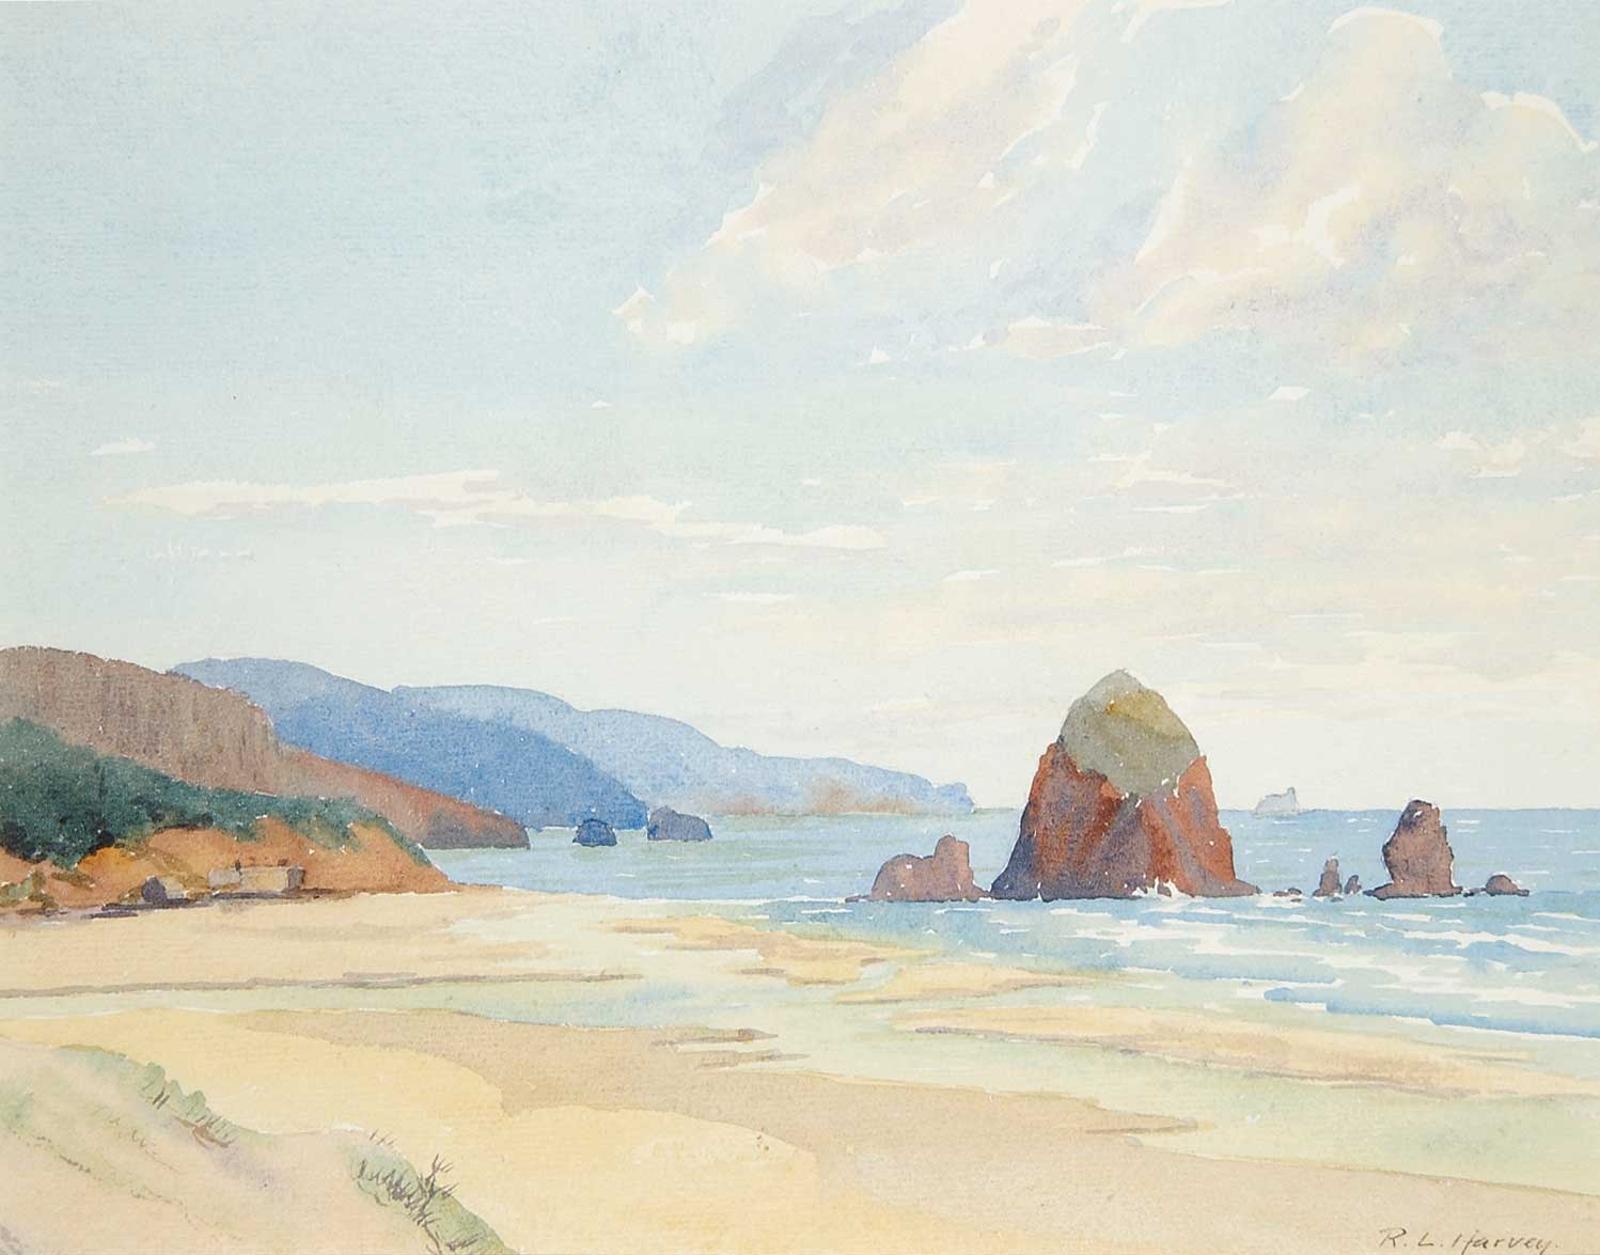 Reginald Llewellyn Harvey (1888-1963) - The Harpback, Common Beach, Oregon